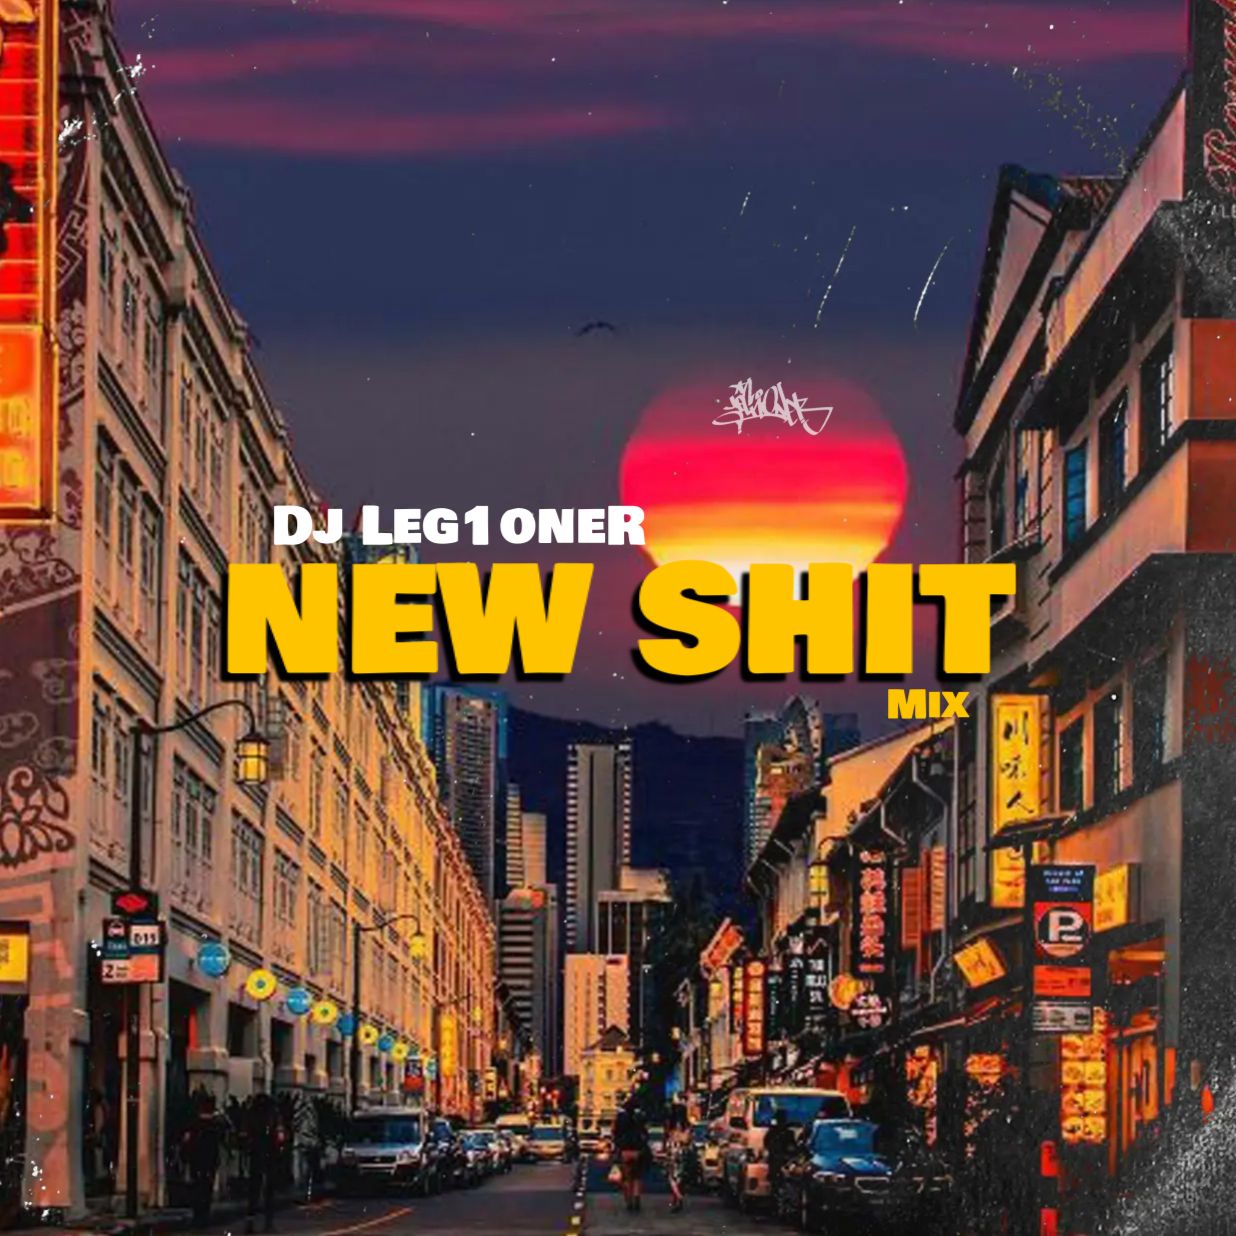 Aflaai Dj Leg1oner - NEW SHIT